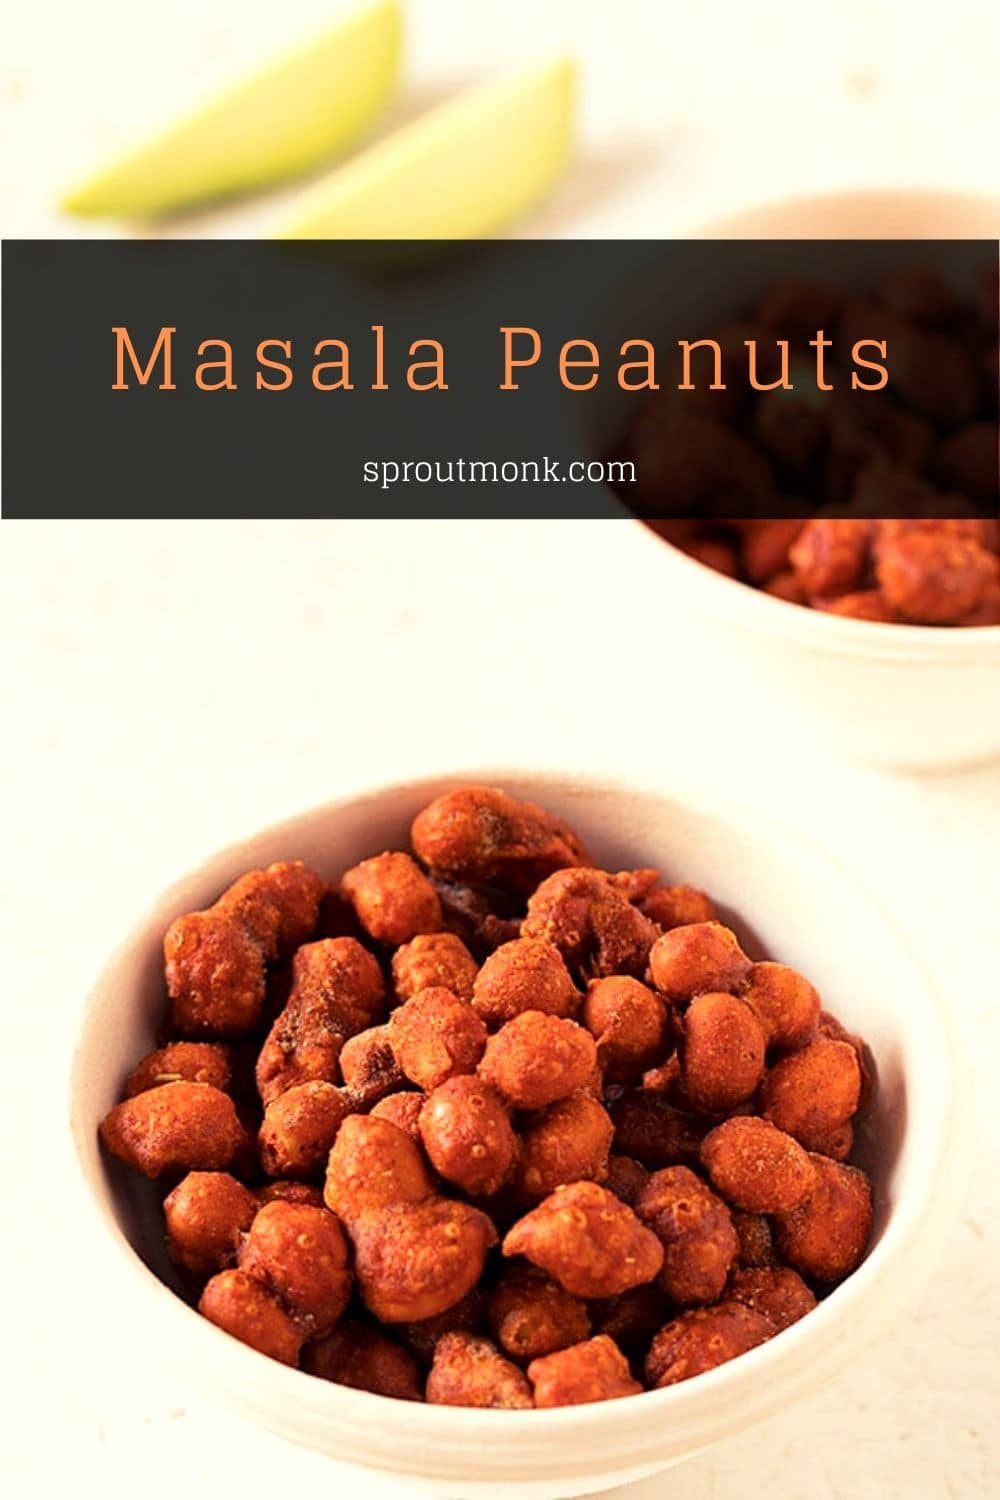 masala peanuts served in a bowl